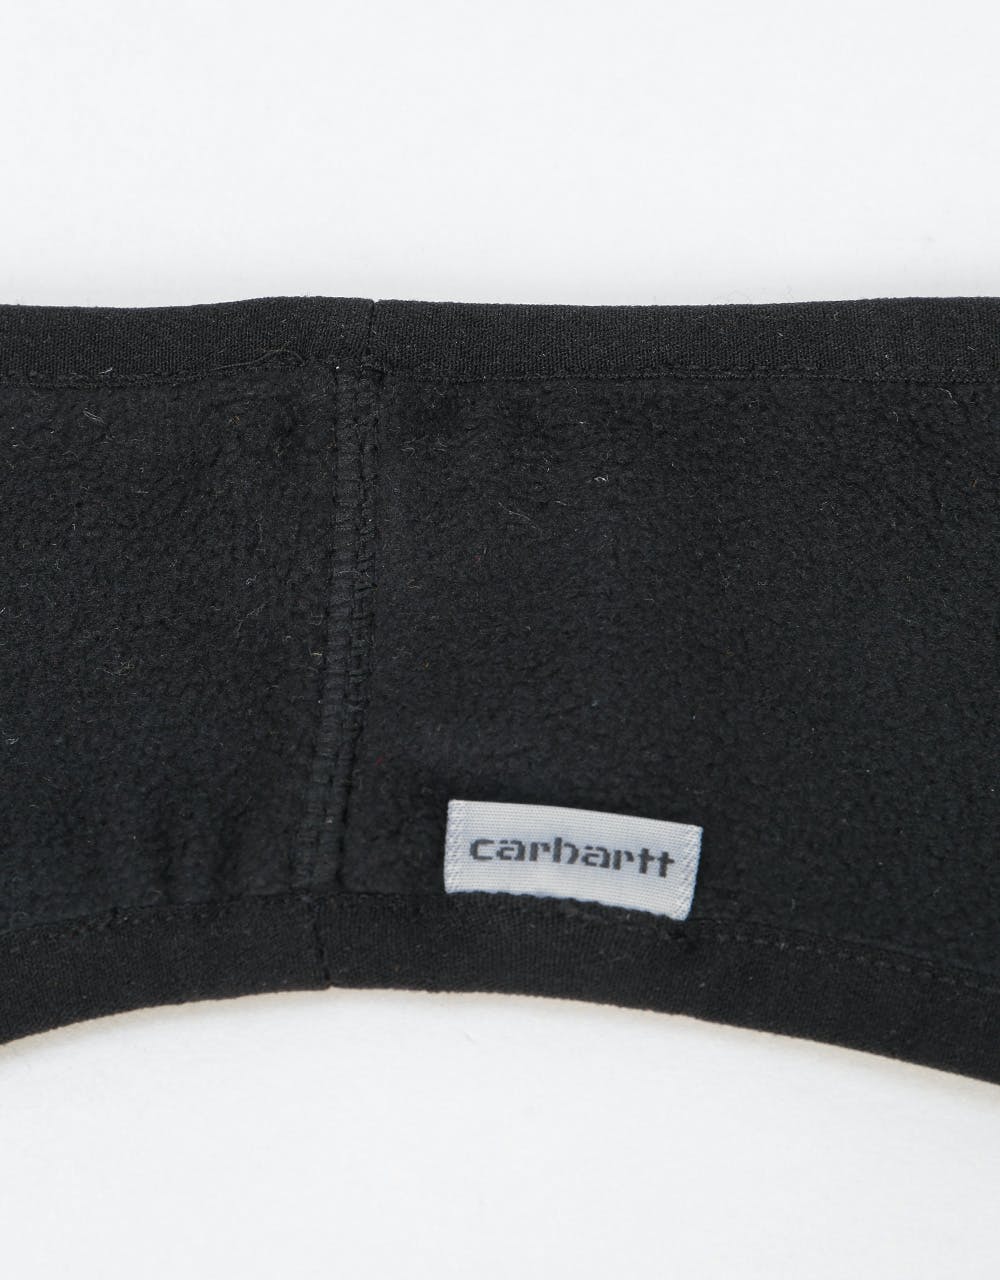 Carhartt WIP Beaufort Headband - Black/Reflective